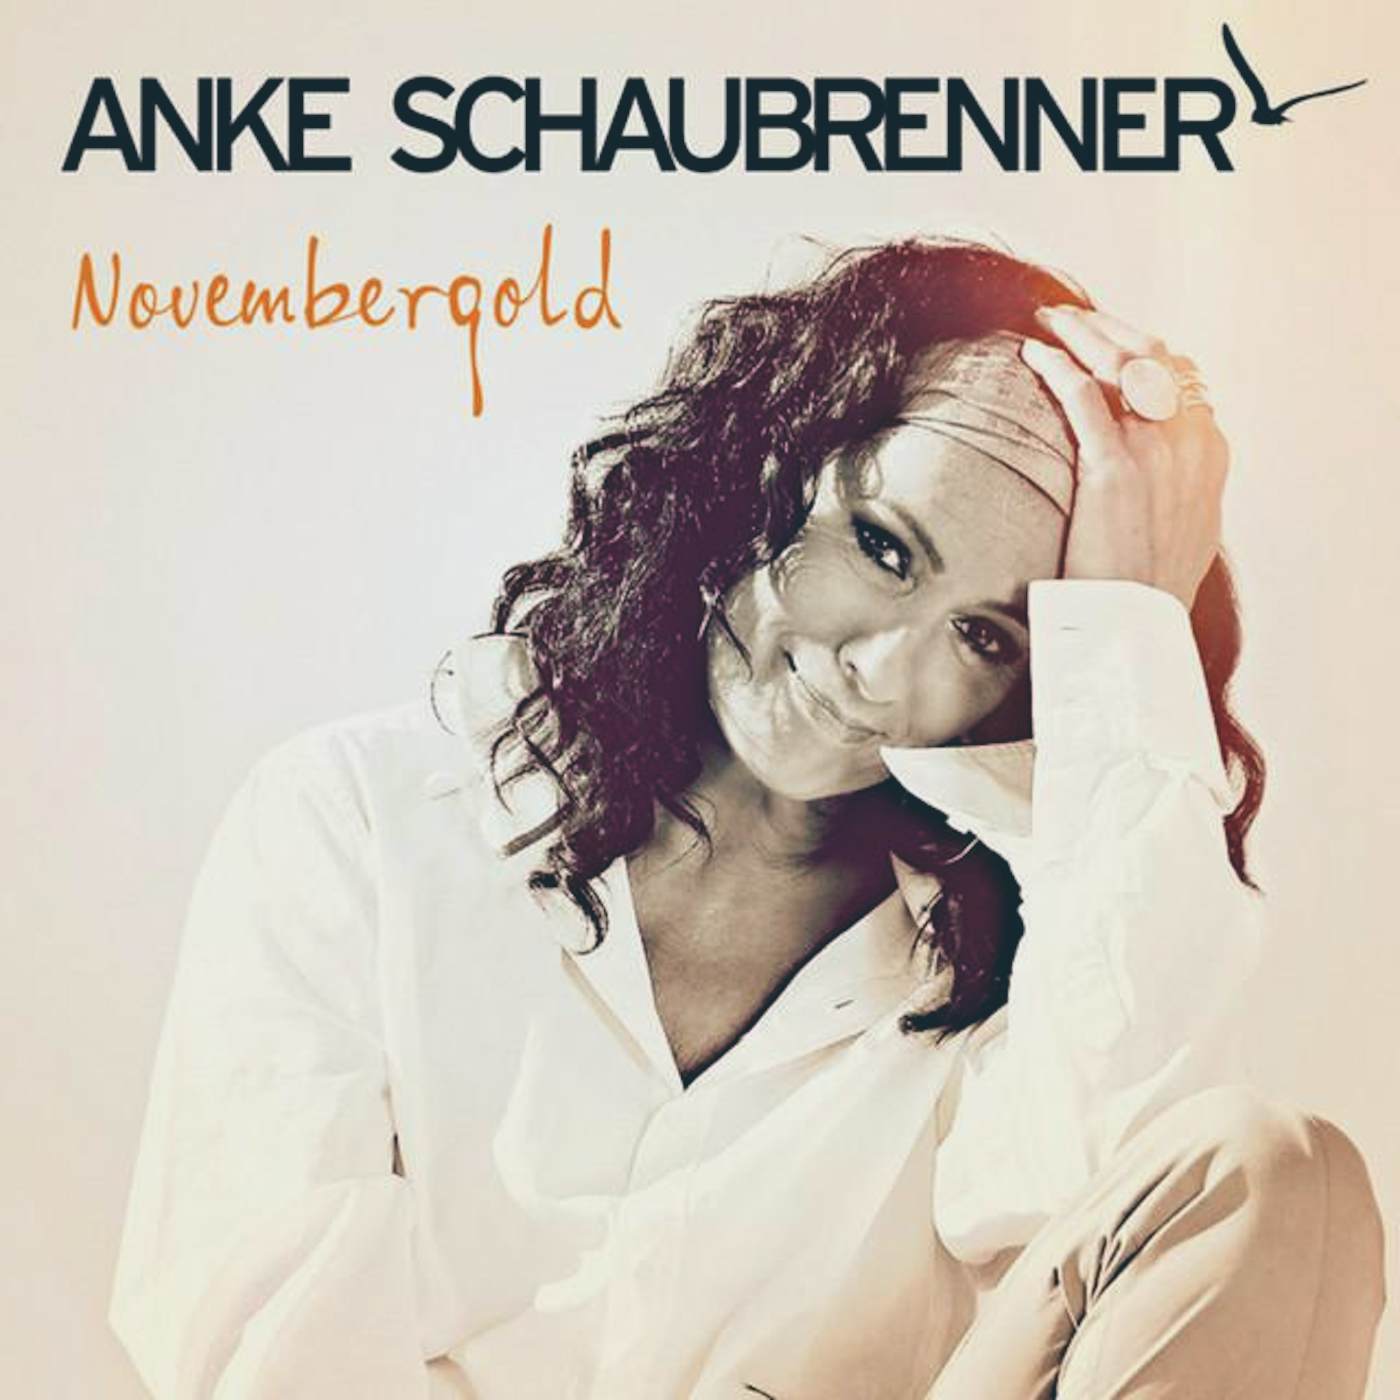 Anke Schaubrenner